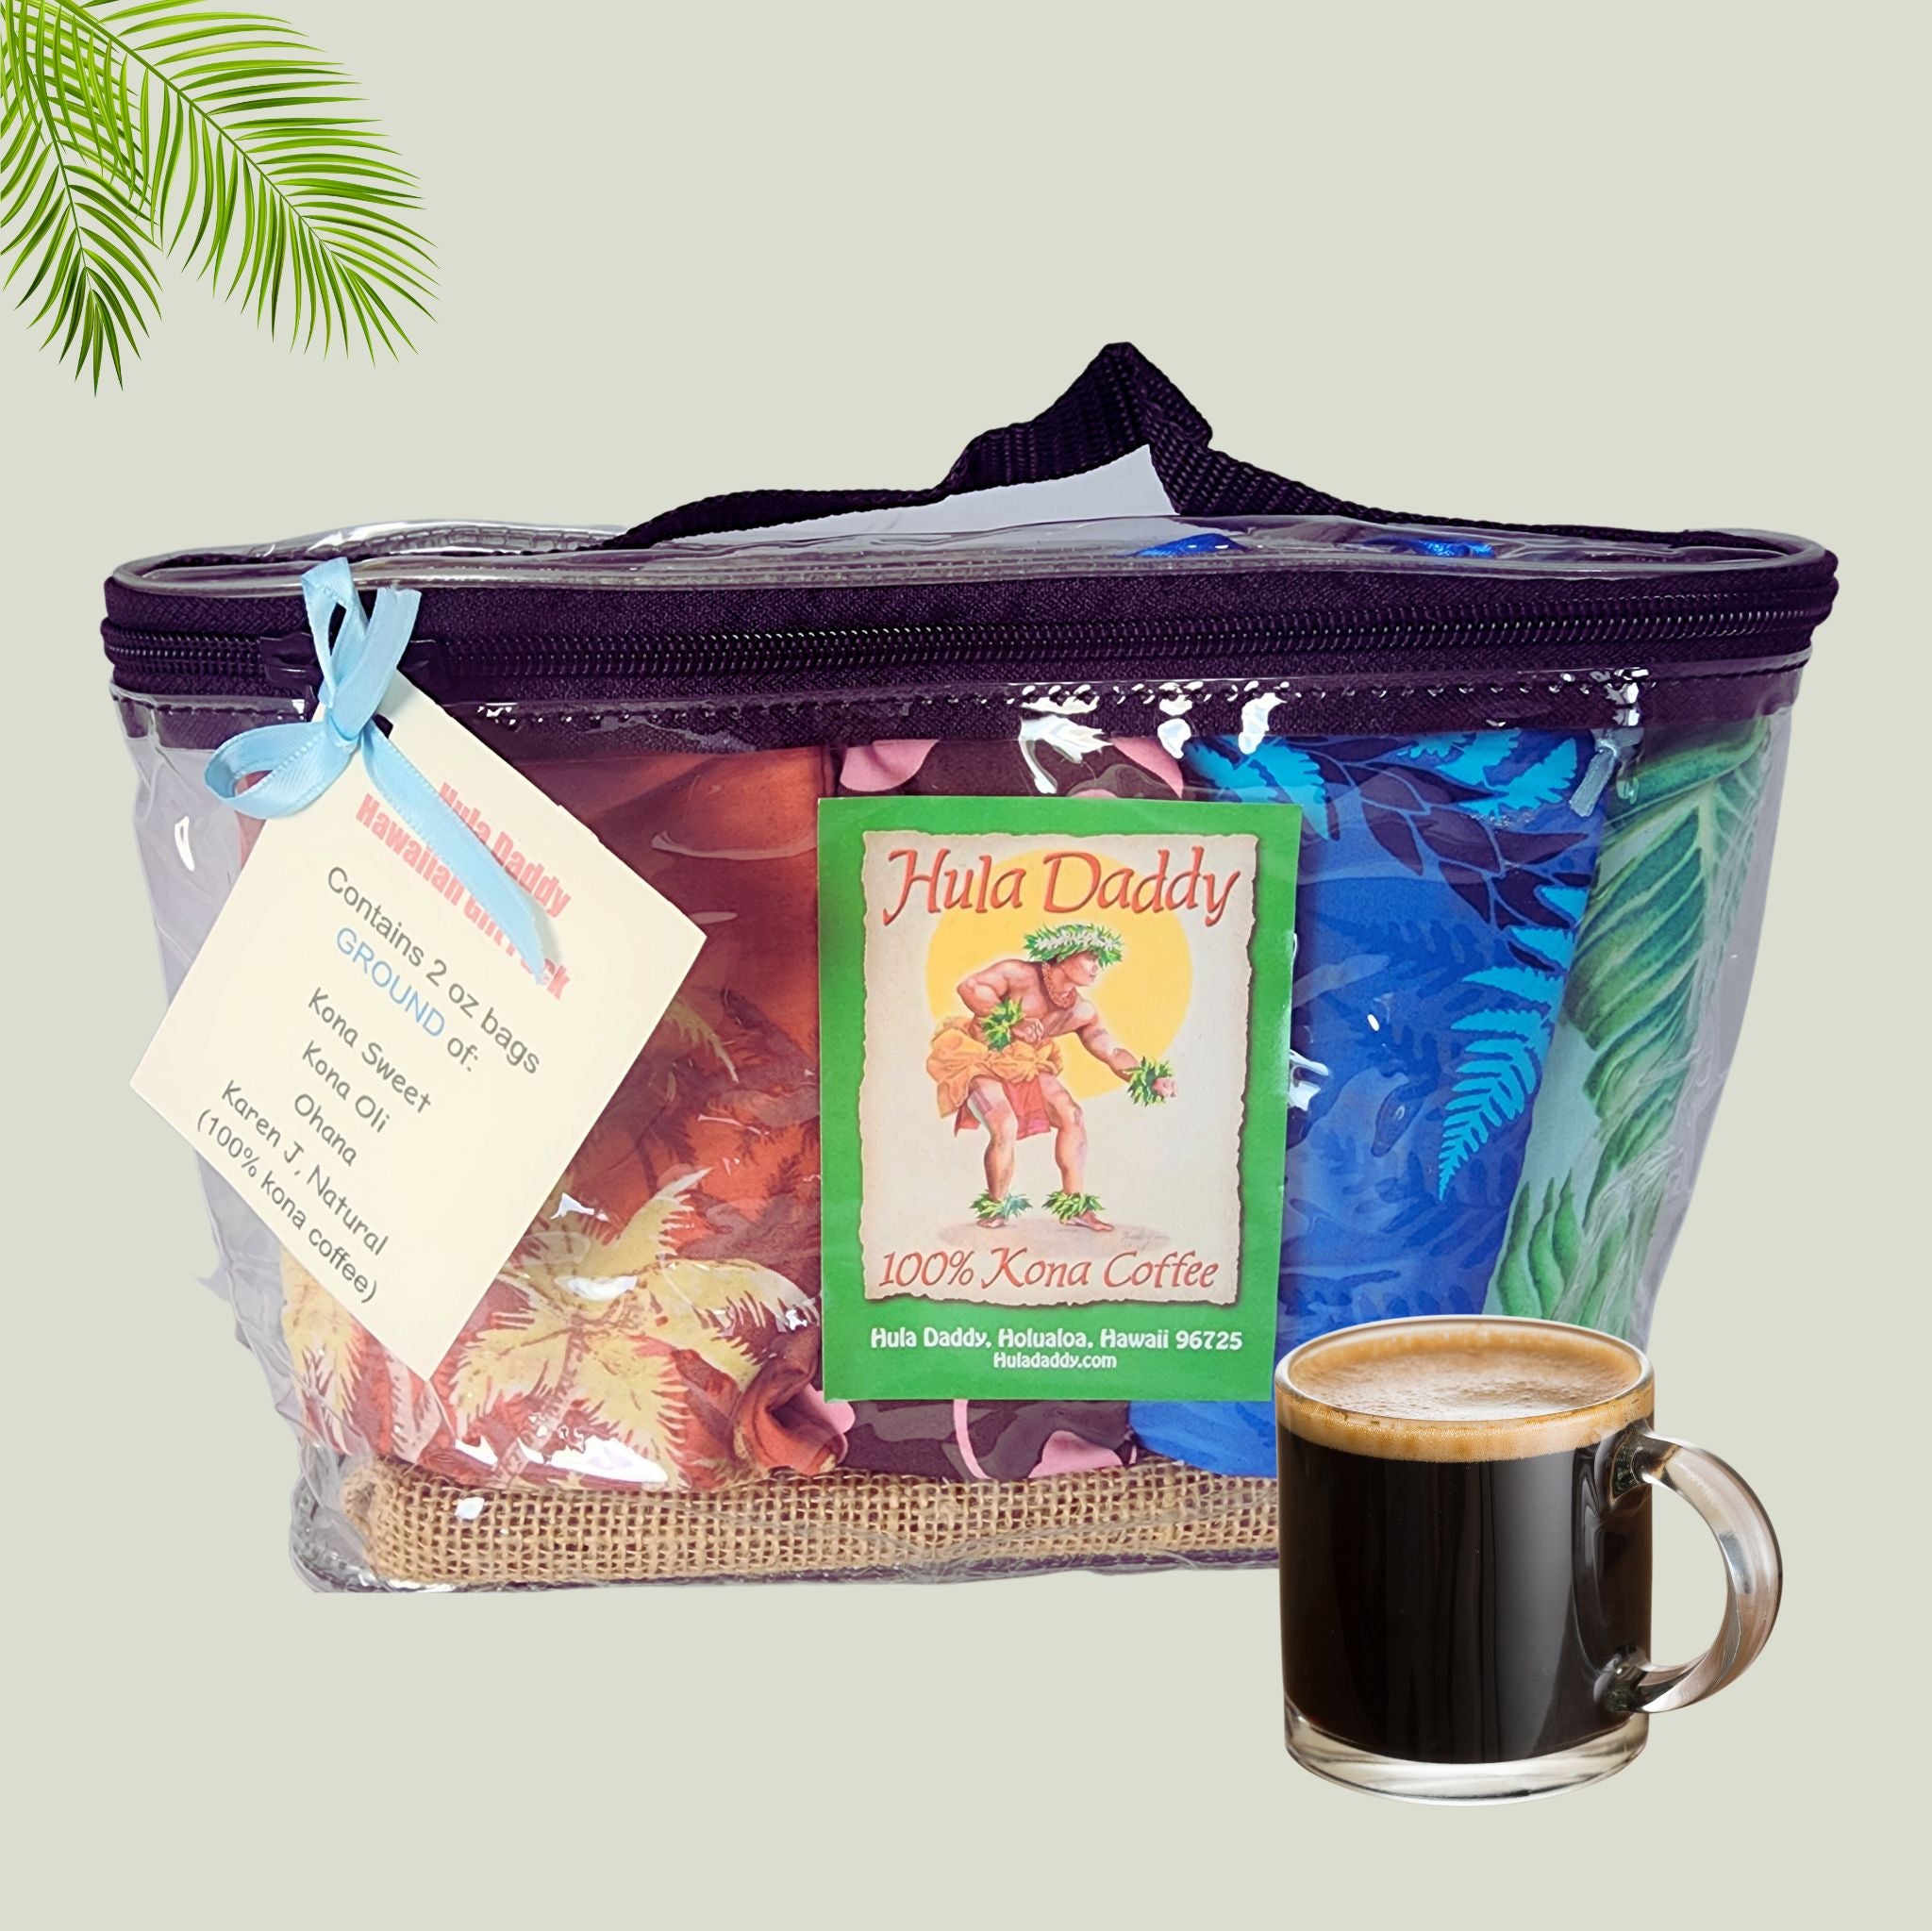 Hula Daddy Gift Pack - Hawaiian